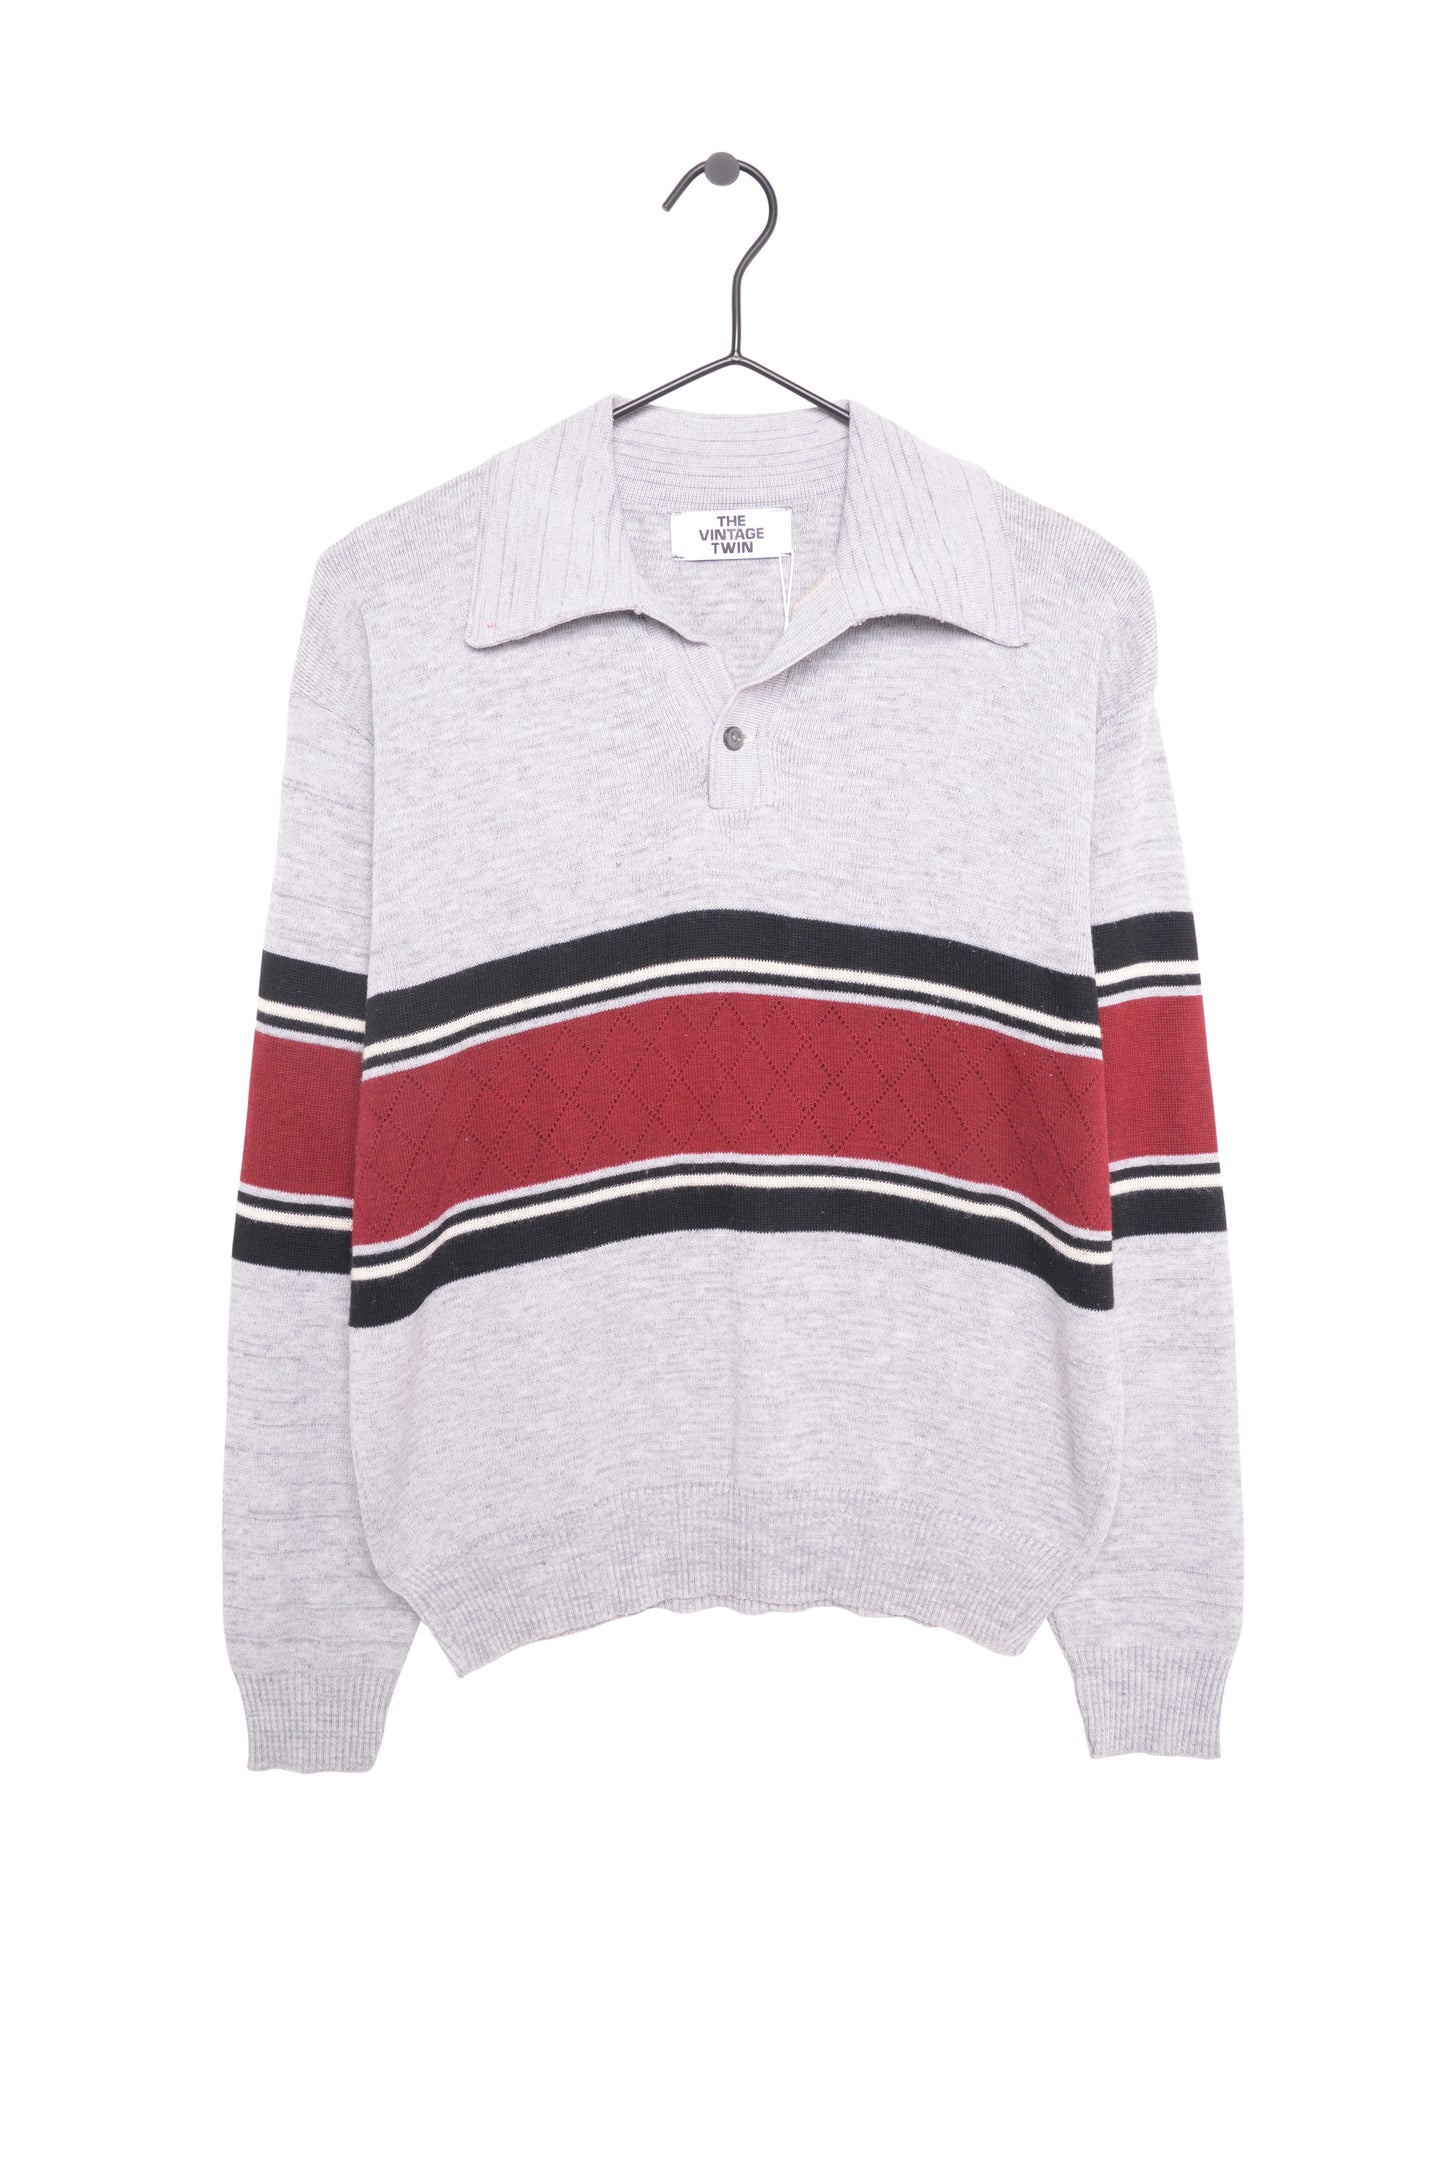 1970s Striped Collared Sweater